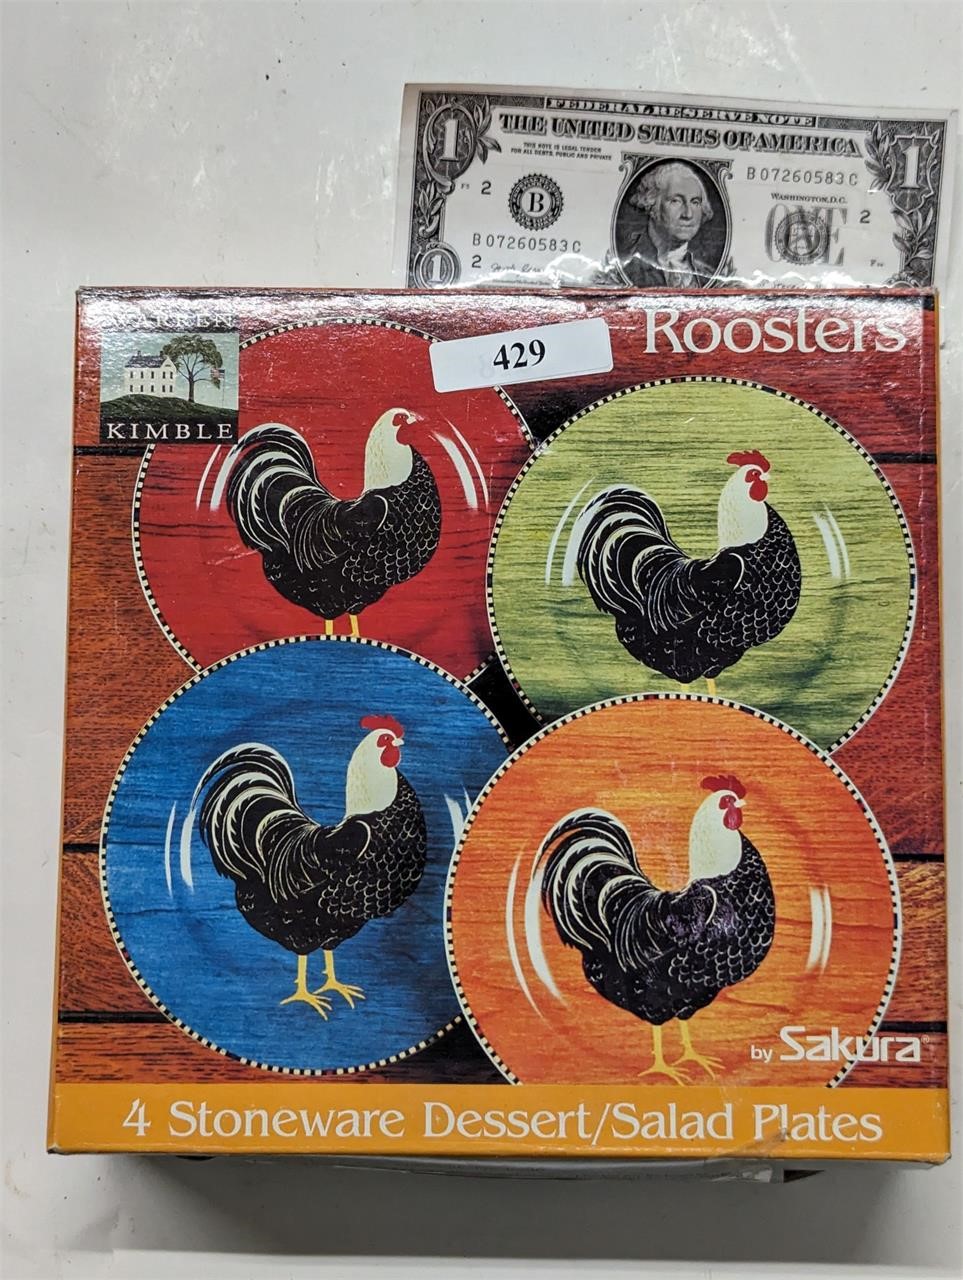 New 4 Warren Kimble rooster plates